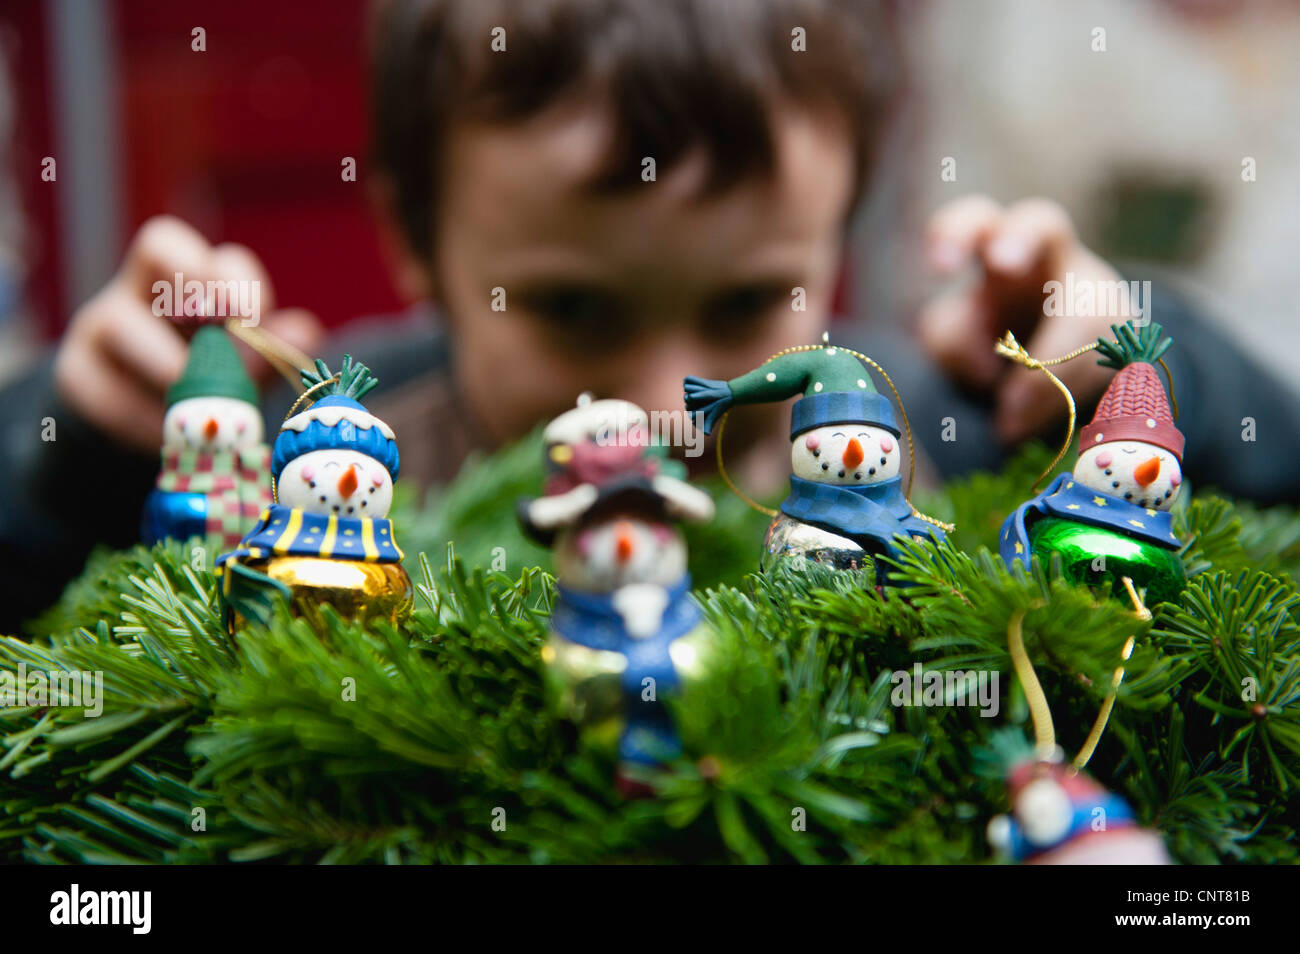 Snowman Christmas ornaments Stock Photo